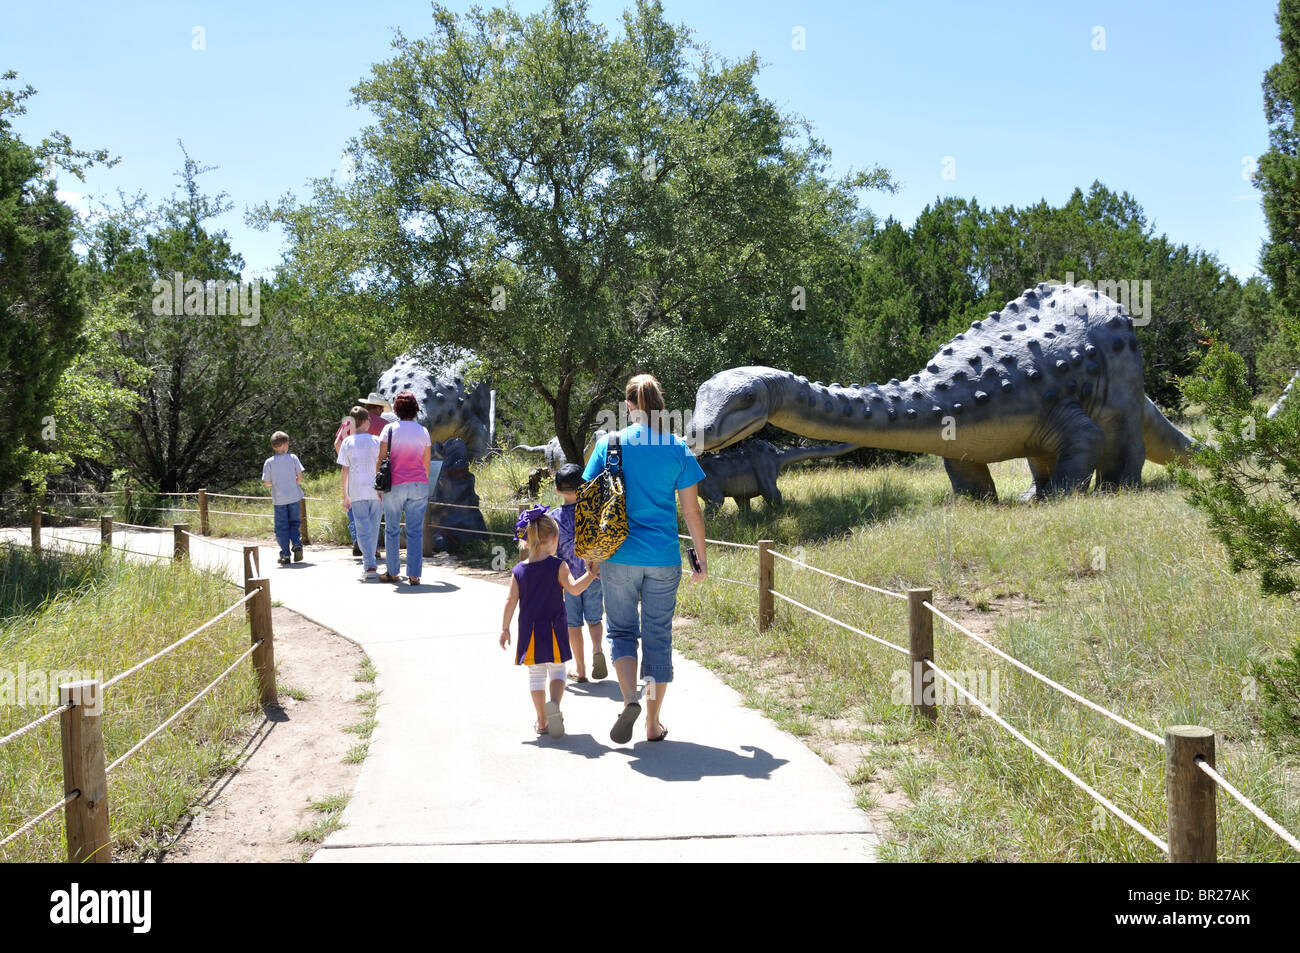 Dinosaur World, Glen Rose, Texas, USA Stockfoto